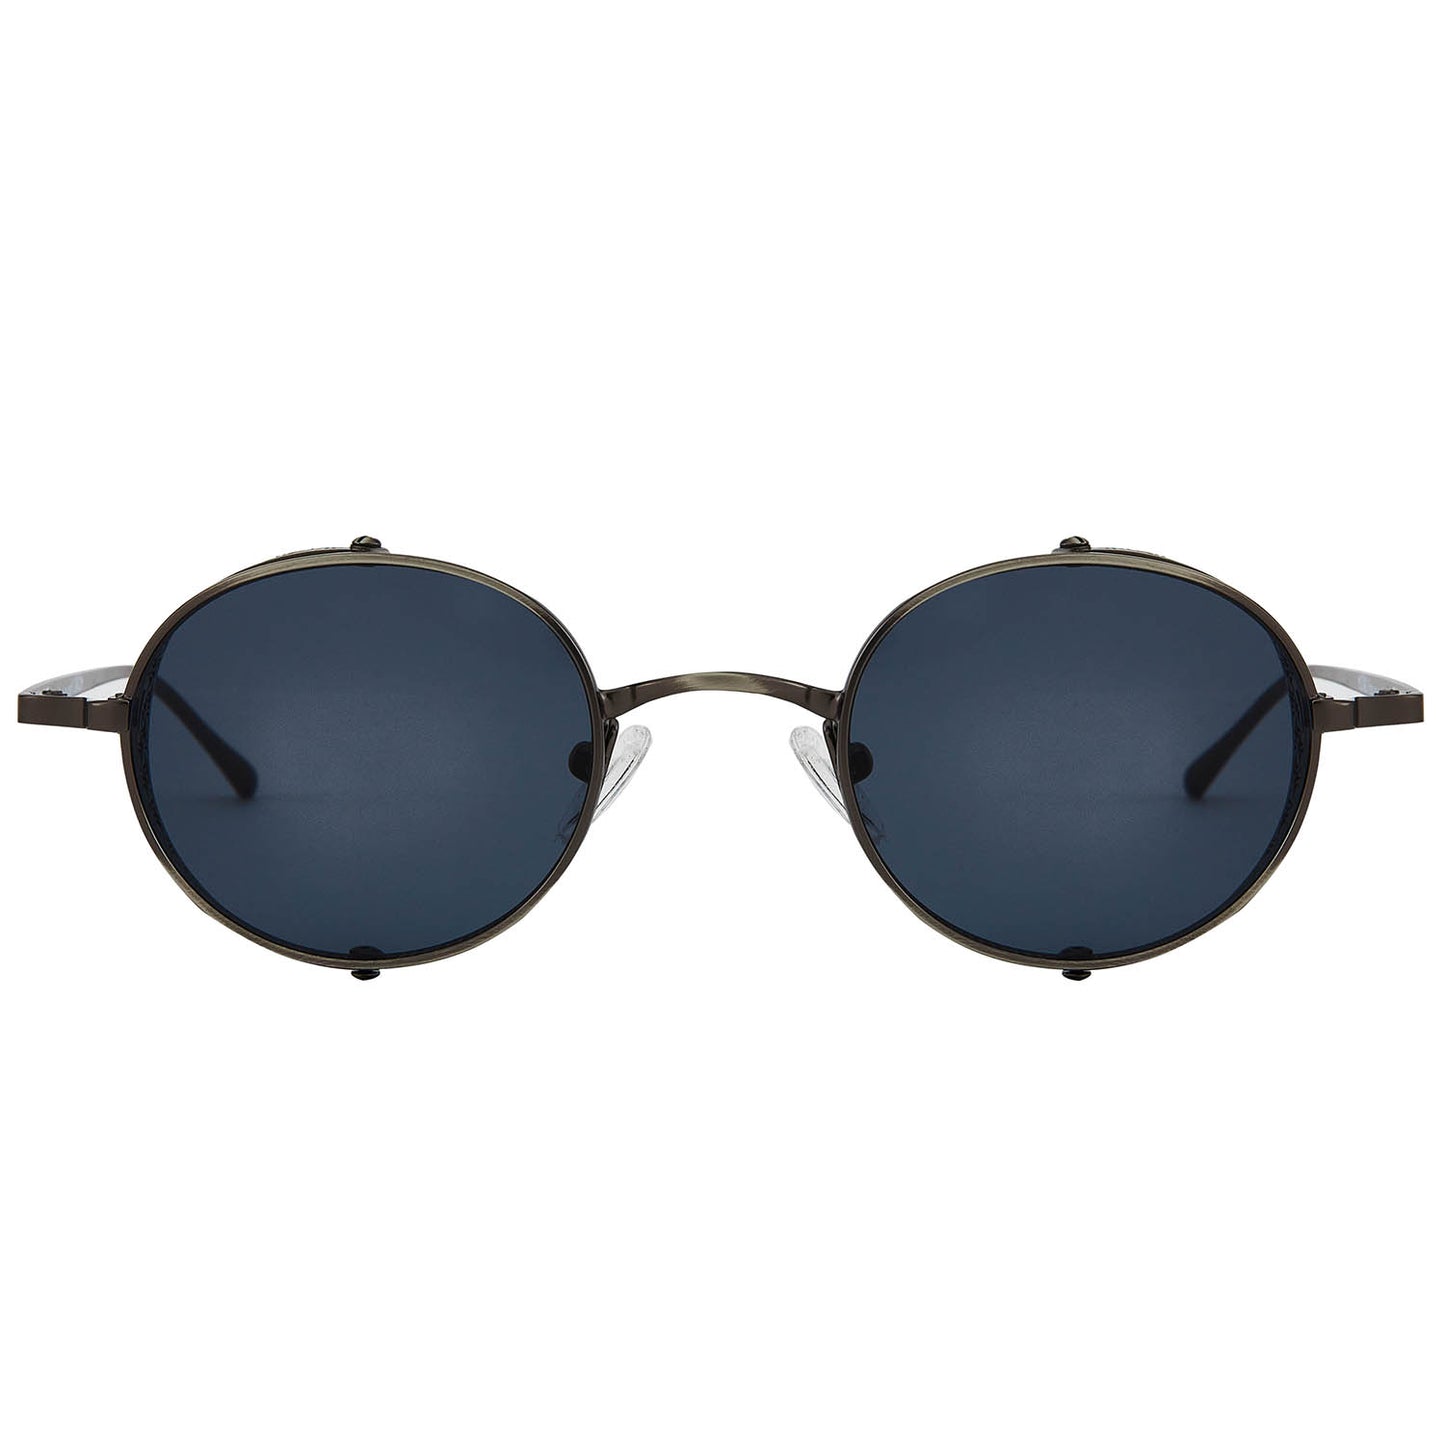 Mokki Round Explorer Sunglasses in grey